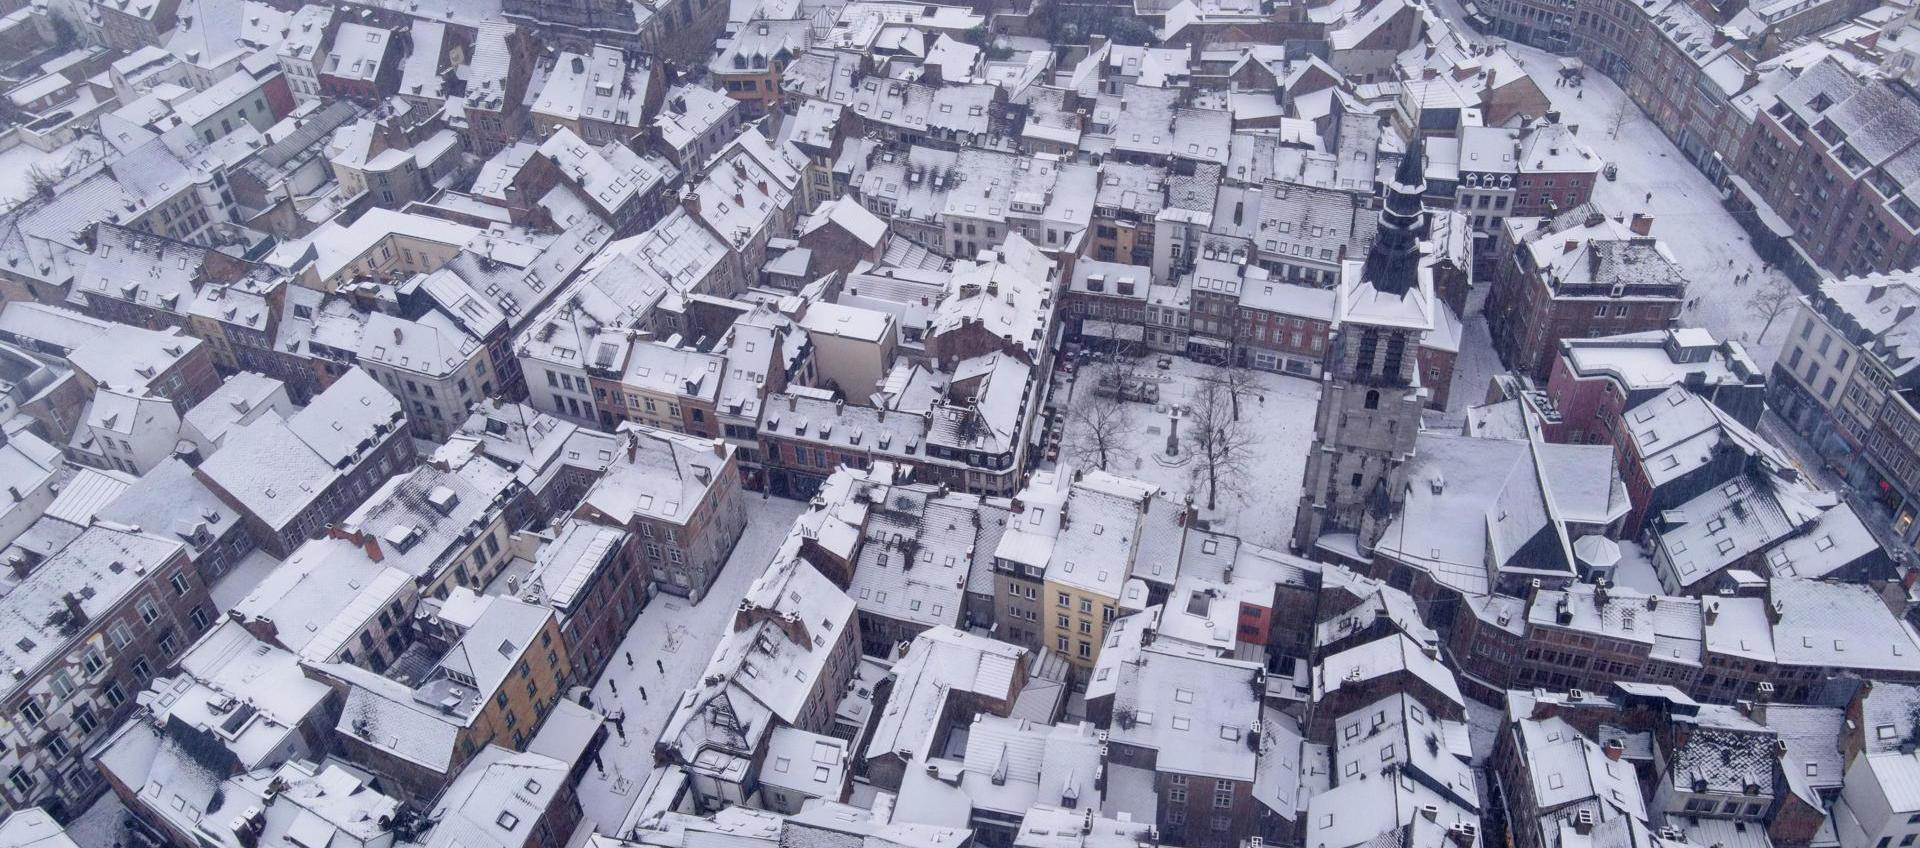 Ciudadela de Namur en Bélgica, cubierta de nieve.